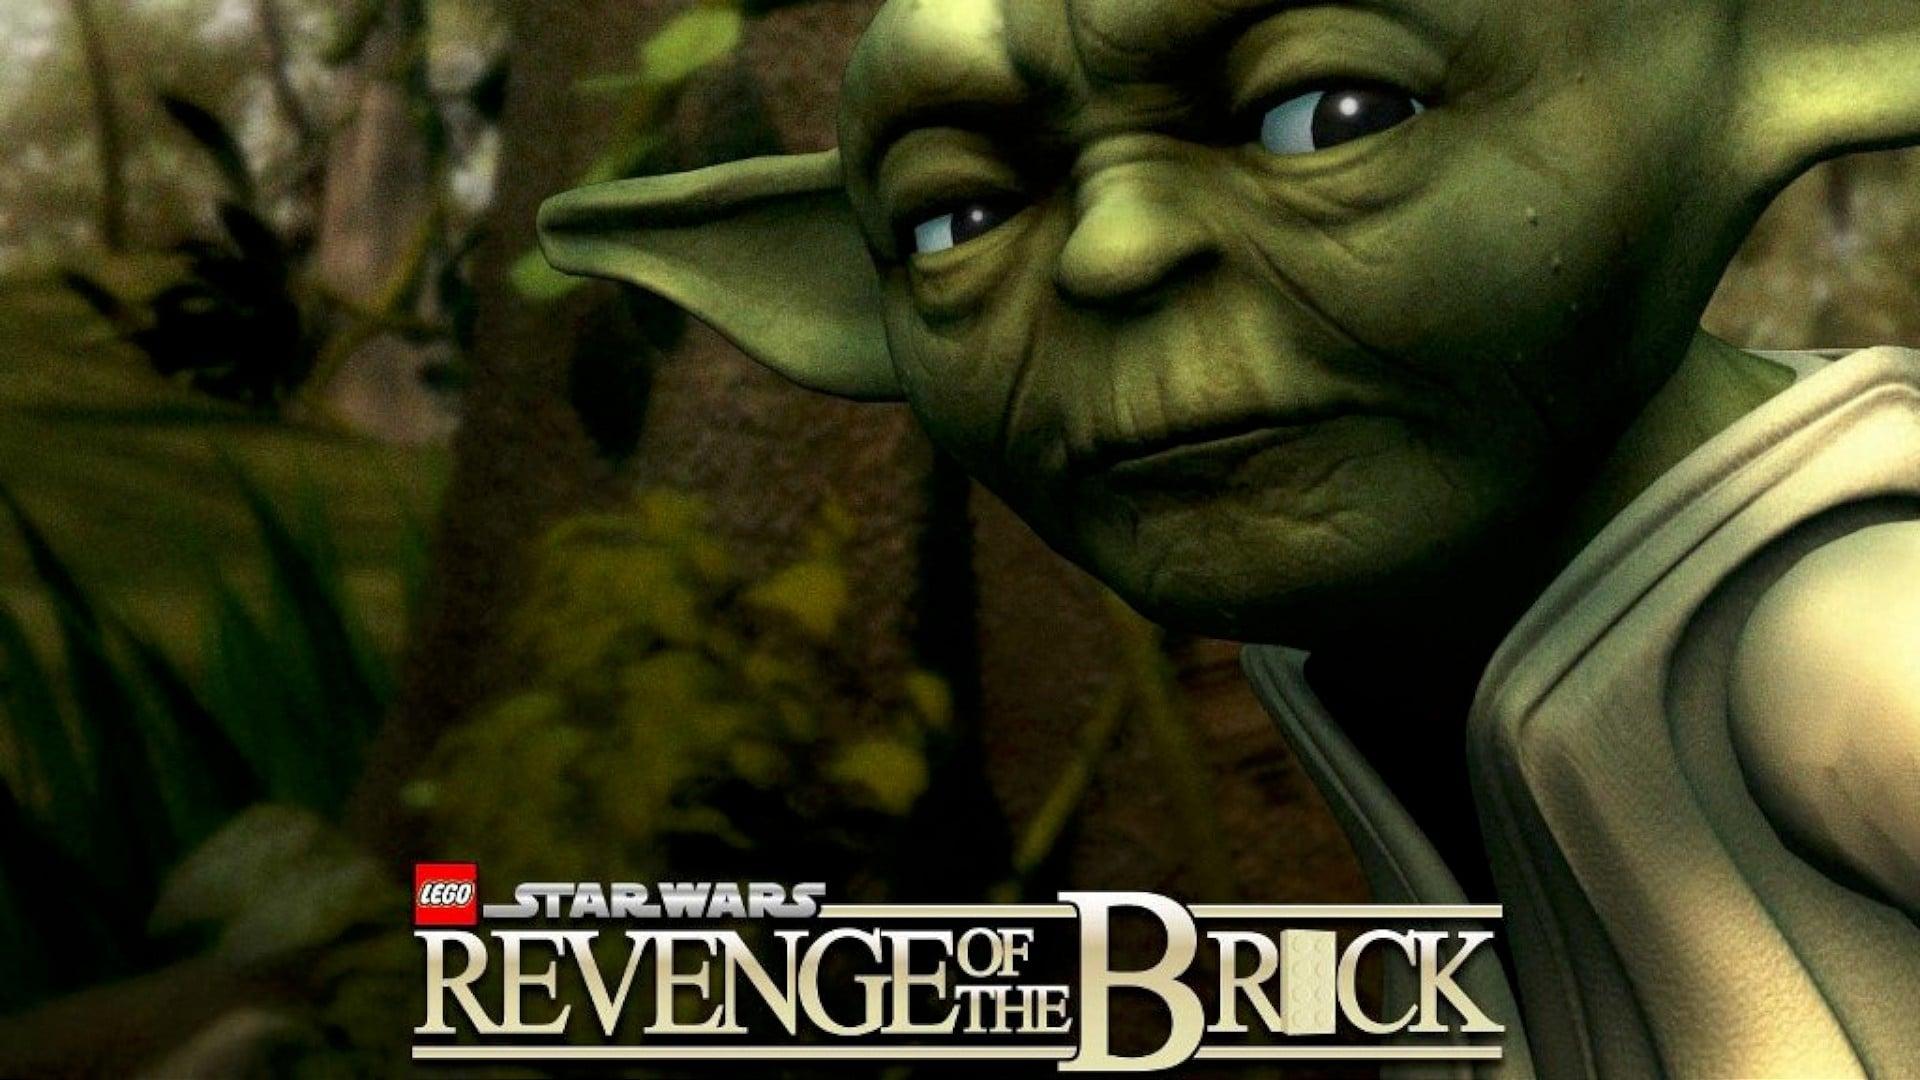 LEGO Star Wars: Revenge of The Brick backdrop